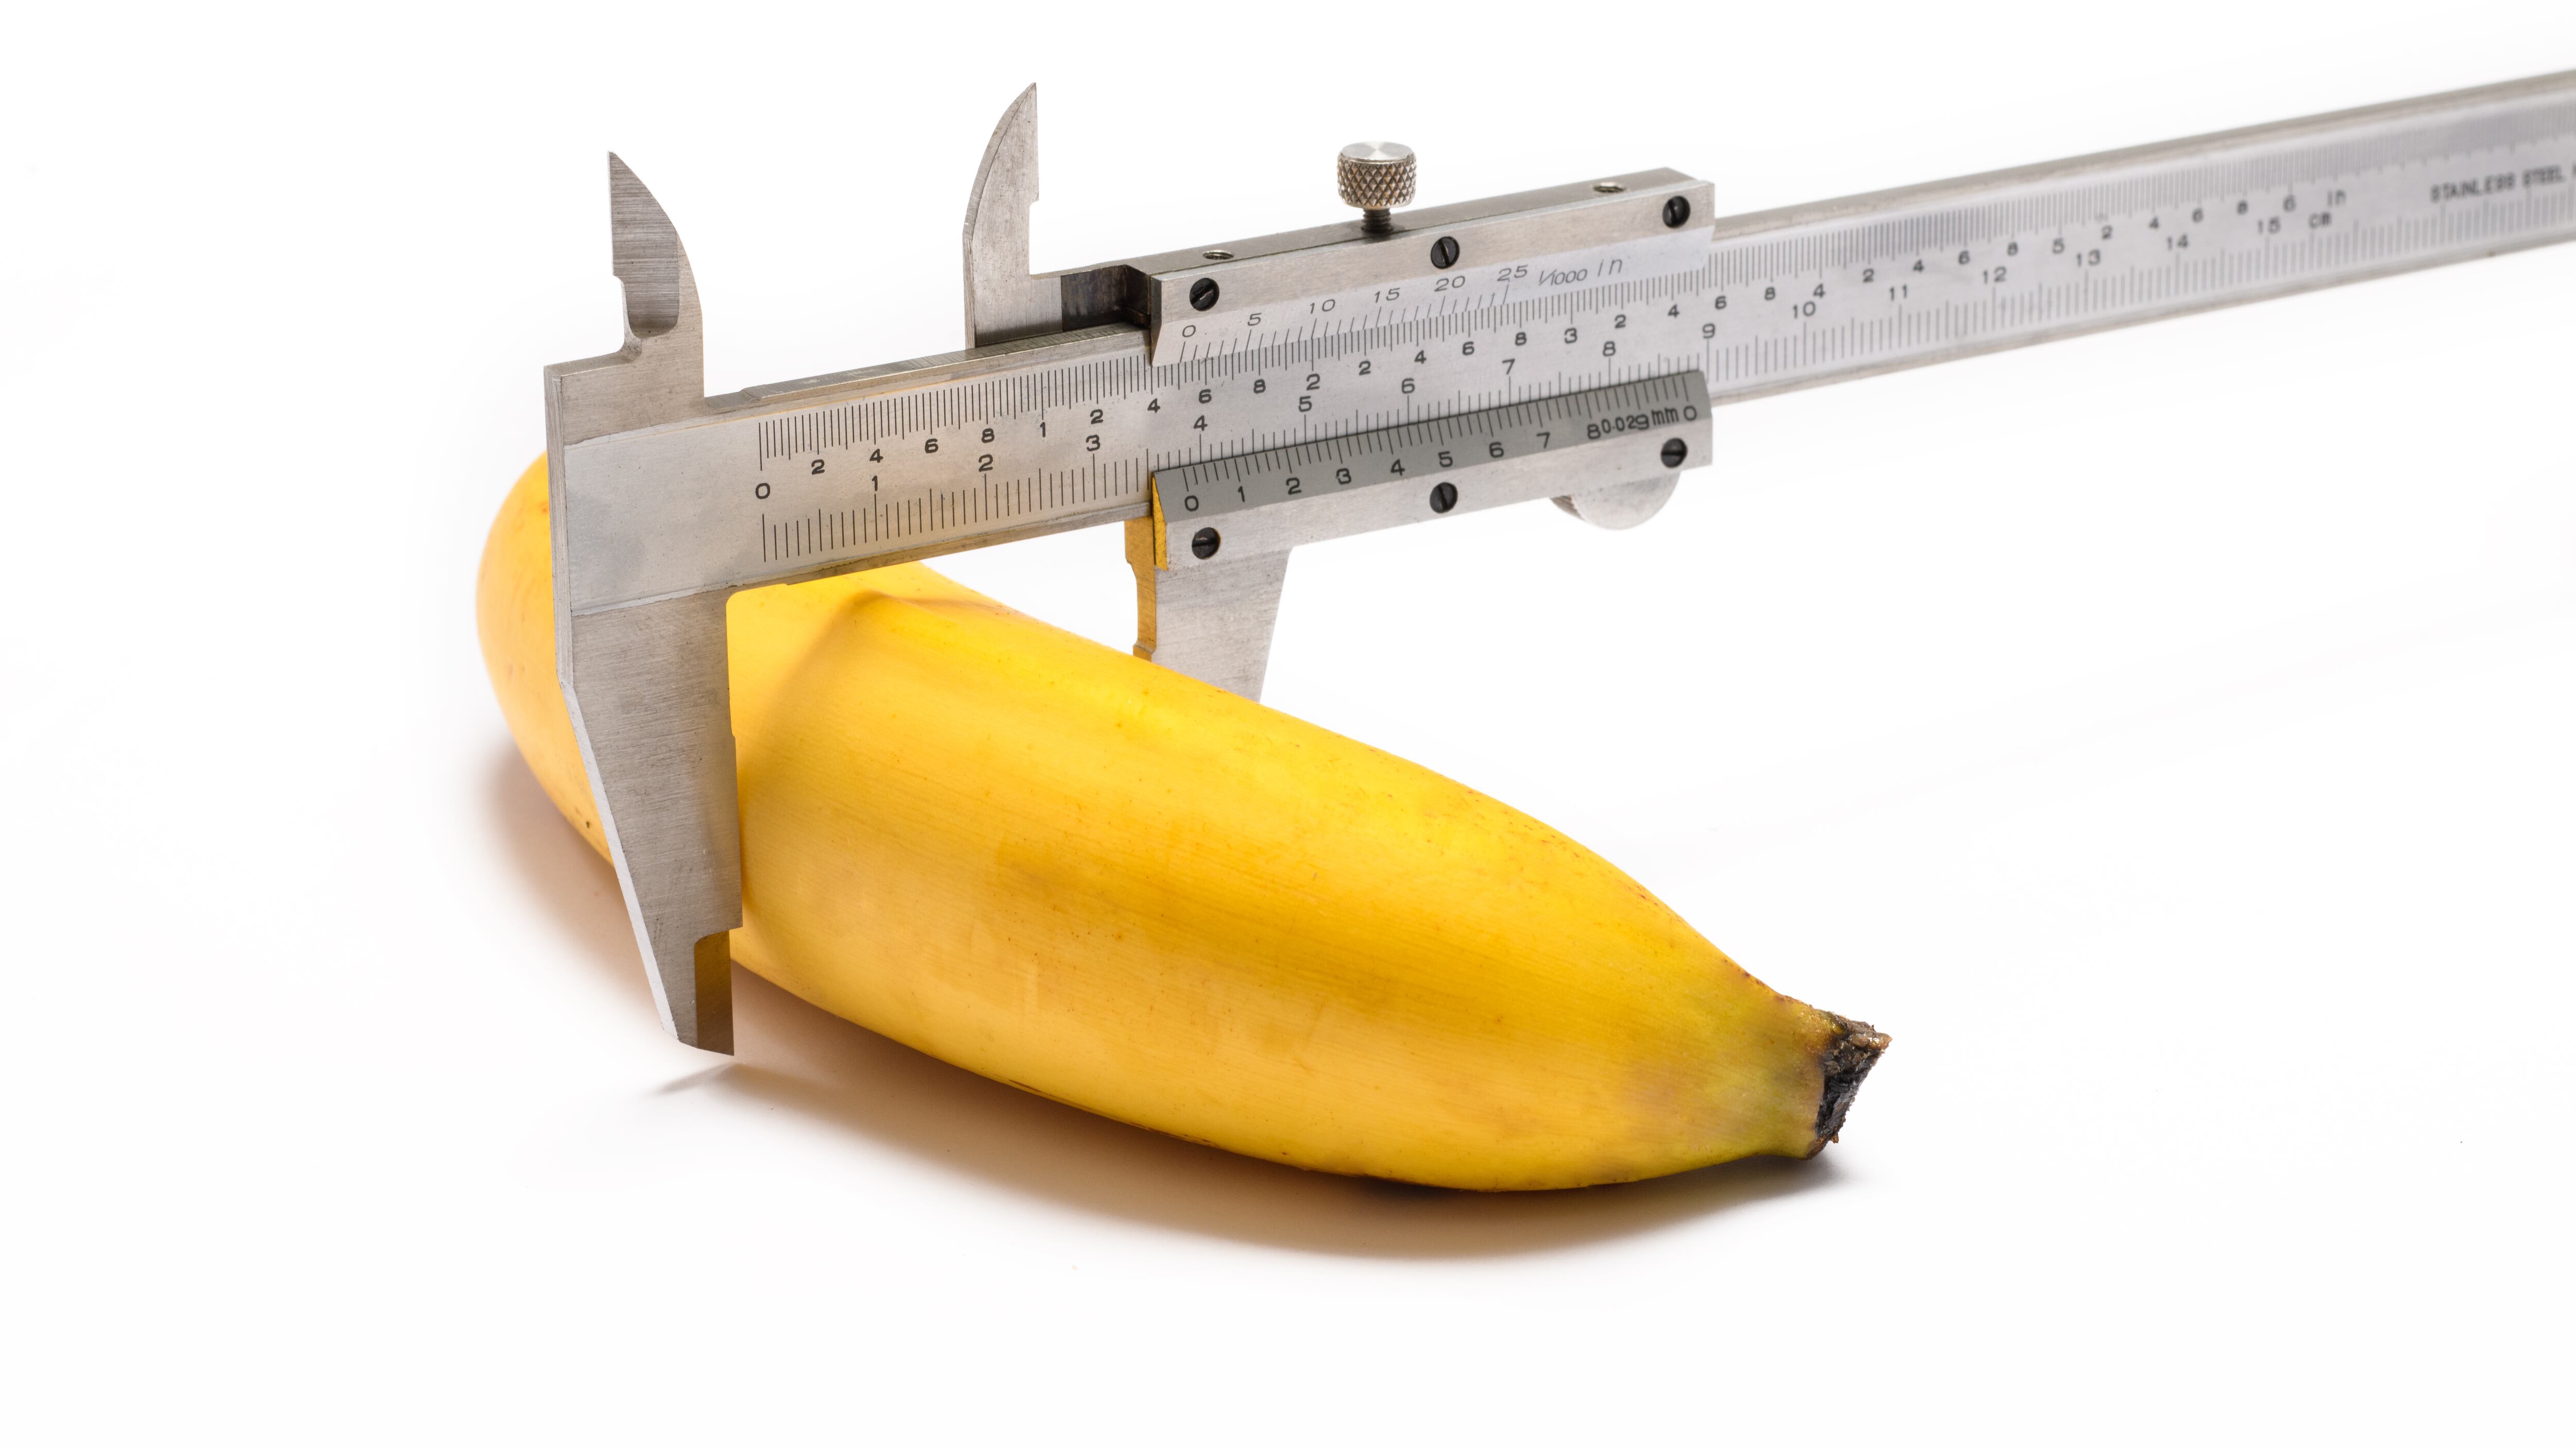 Caliper measuring the diameter of a banana